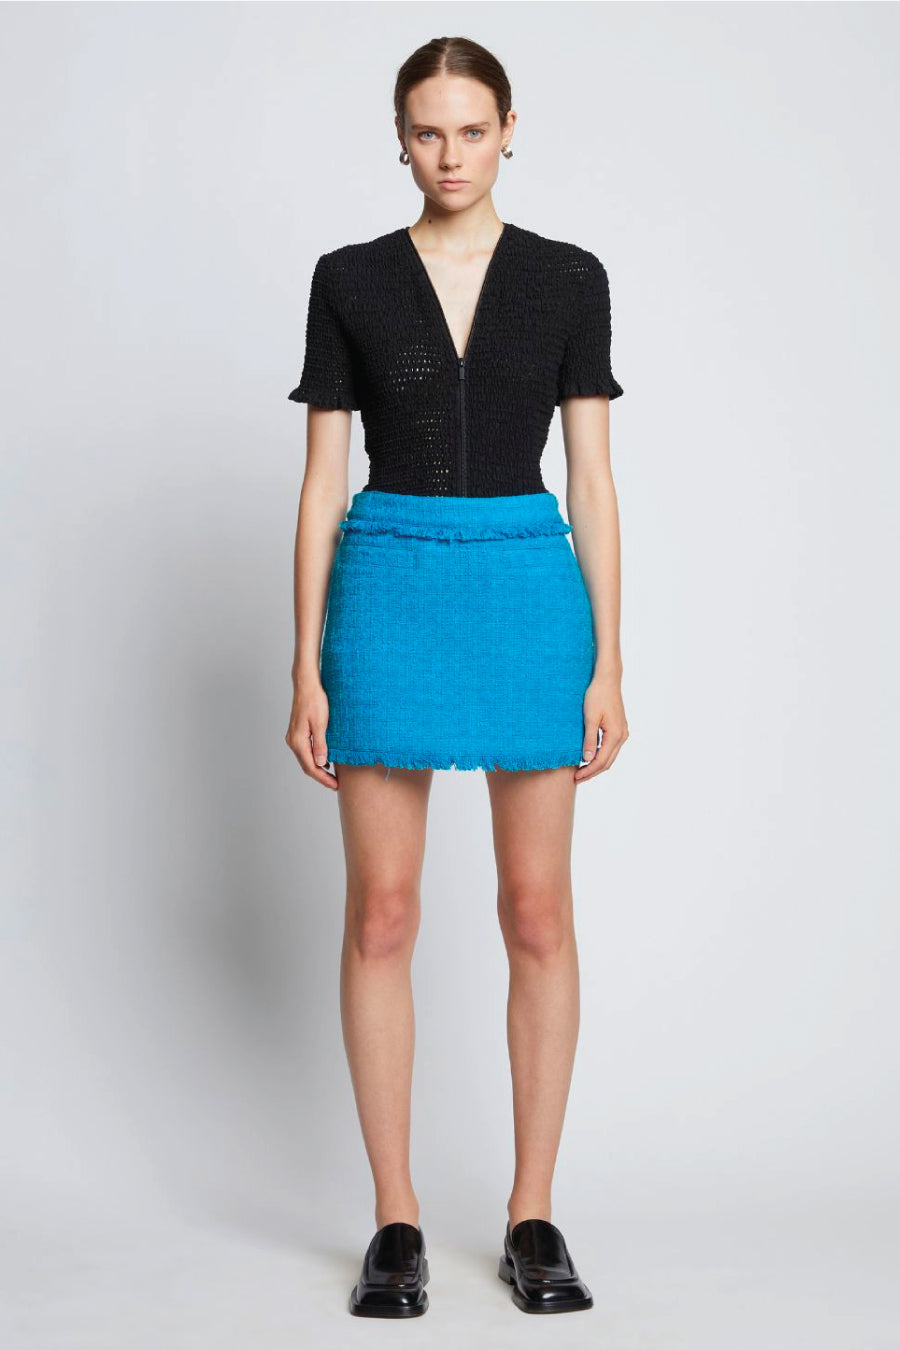 Proenza Schouler White Label Tweed Mini Skirt - Dark Turquoise